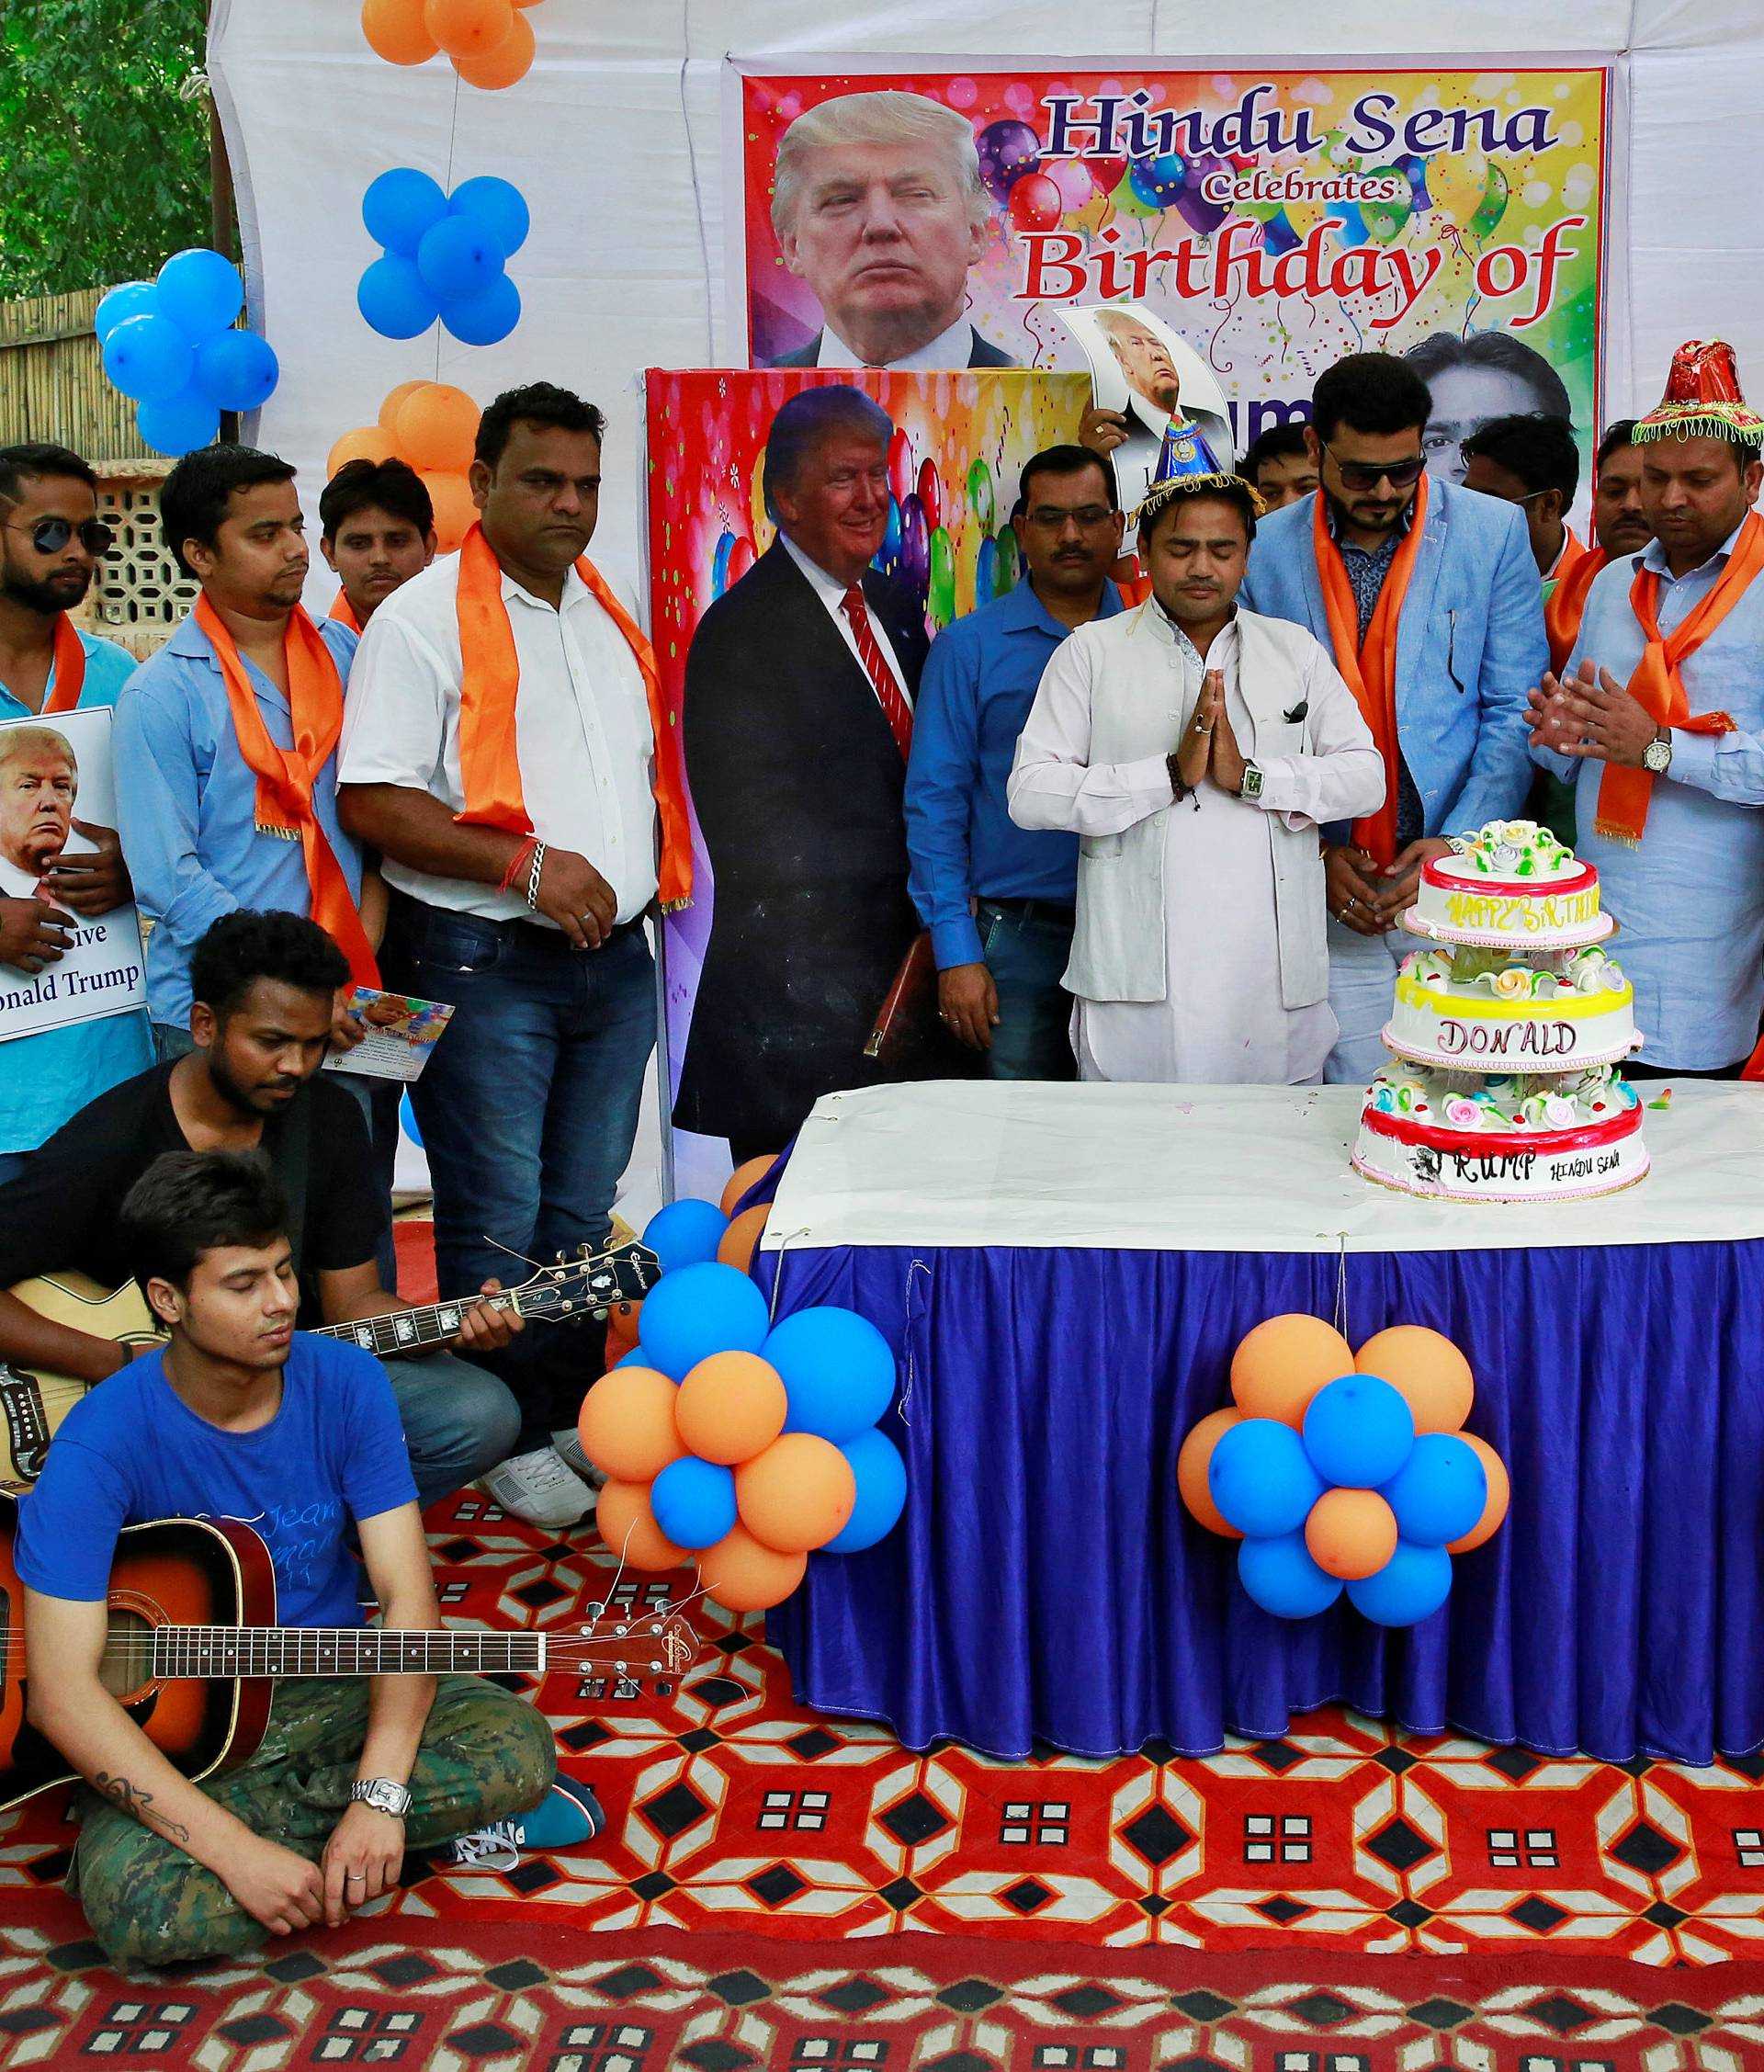 Members of Hindu Sena, a right wing Hindu group, celebrate U.S. Republican presidential candidate Donald Trump's birthday in New Delhi